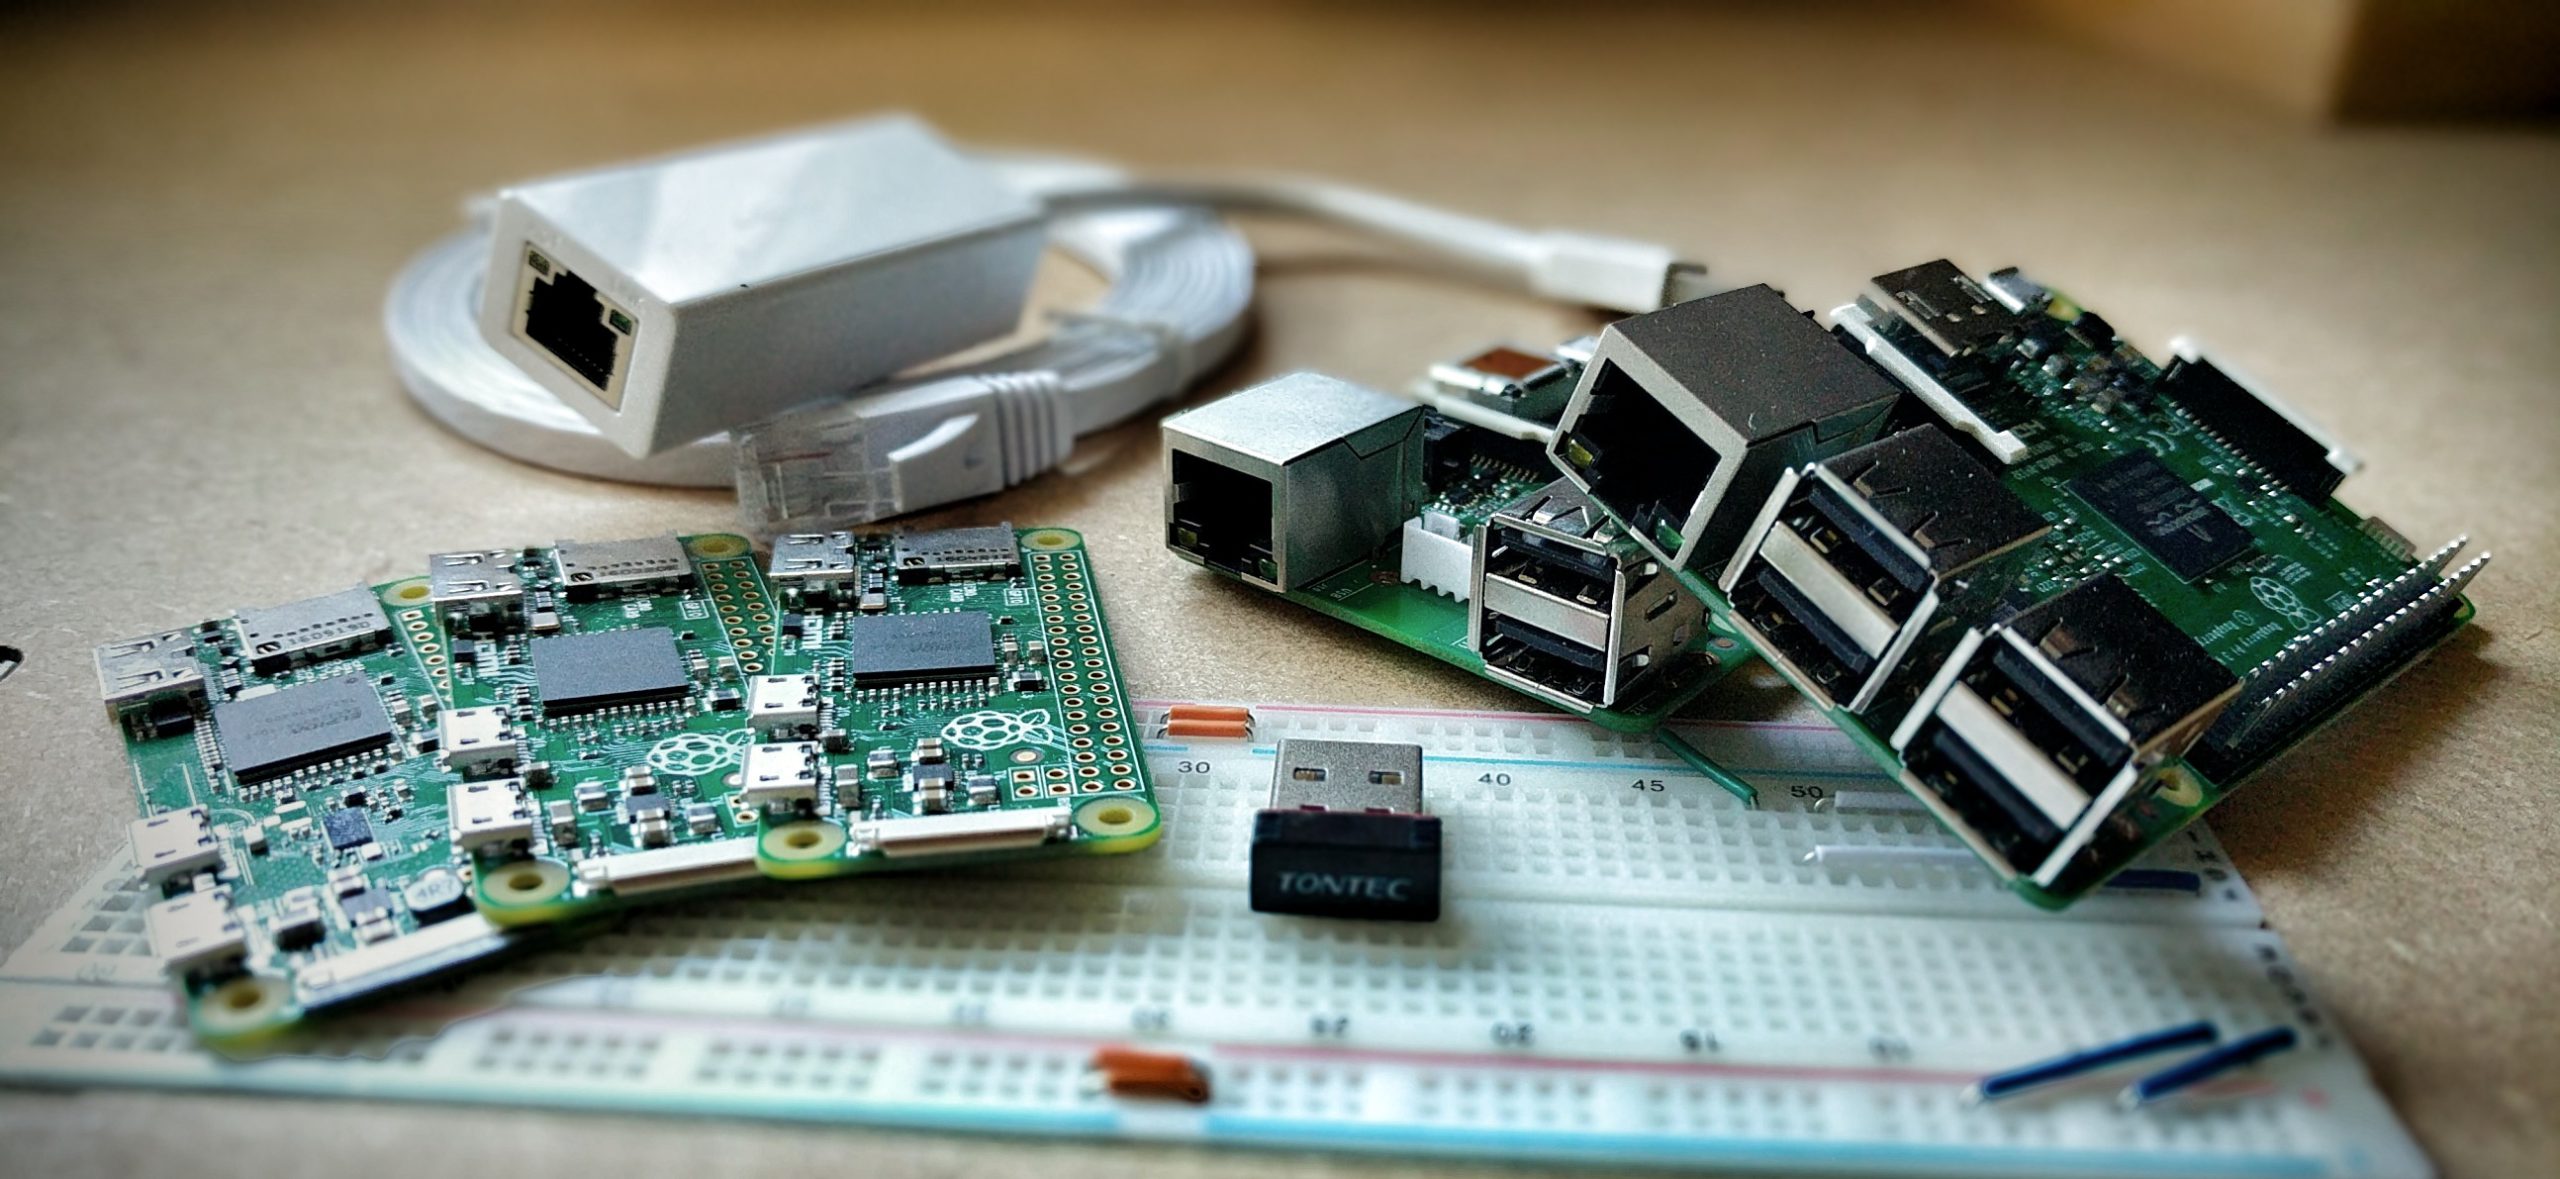 Raspberry Pi network speed test: RPI2, RPI3, Zero, ZeroW ...